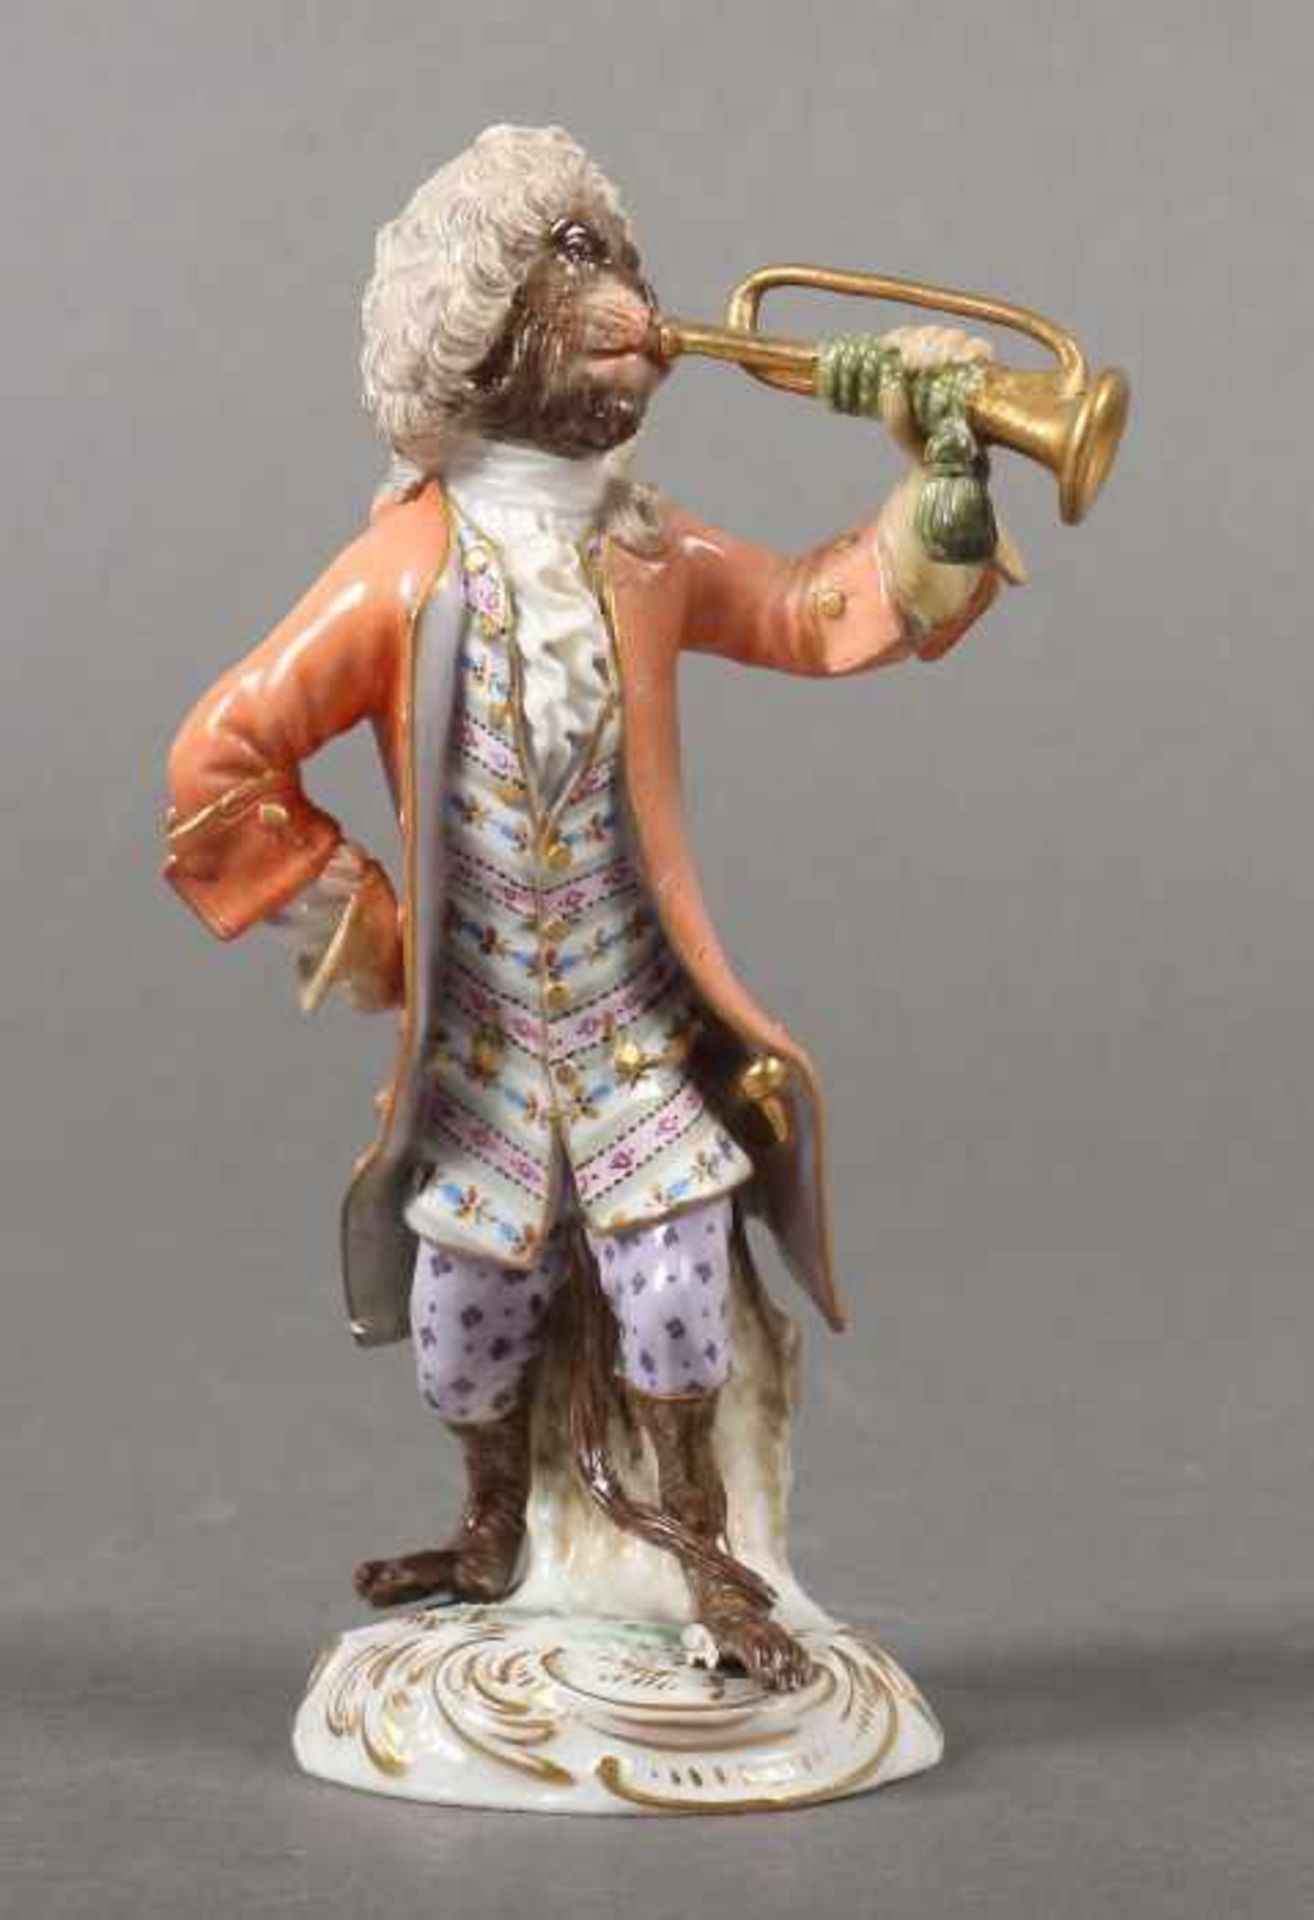 Kaendler, Johann Joachim1706 - 1775. "Trompeter" aus der insgesamt 21 Figuren umfassenden Serie "